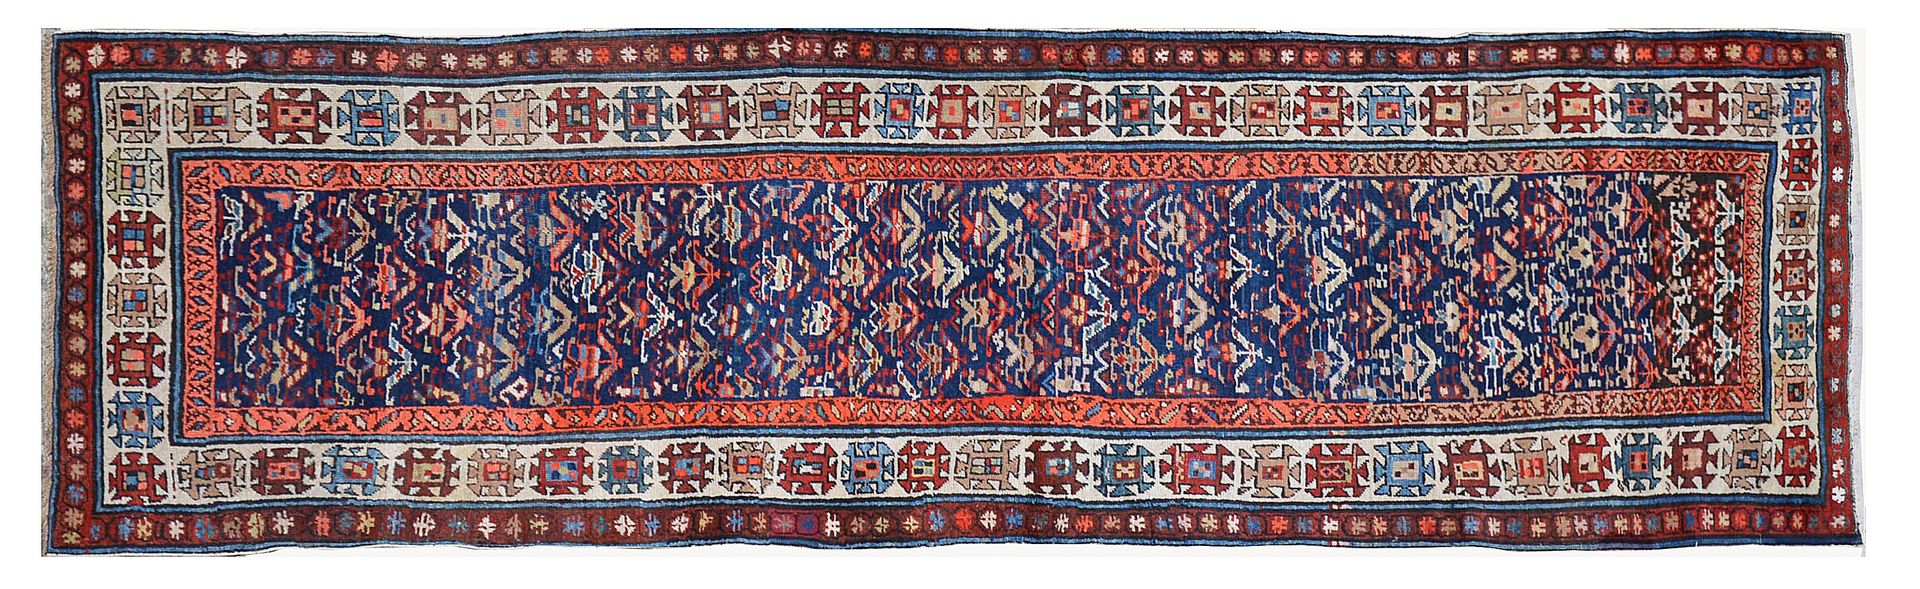 Null 塔利什画廊地毯（高加索），19世纪末

尺寸：320 x 100厘米。

技术特点 : 羊毛基础上的羊毛绒。

一个带有多色开花植物的蓝色领域，被一个&hellip;